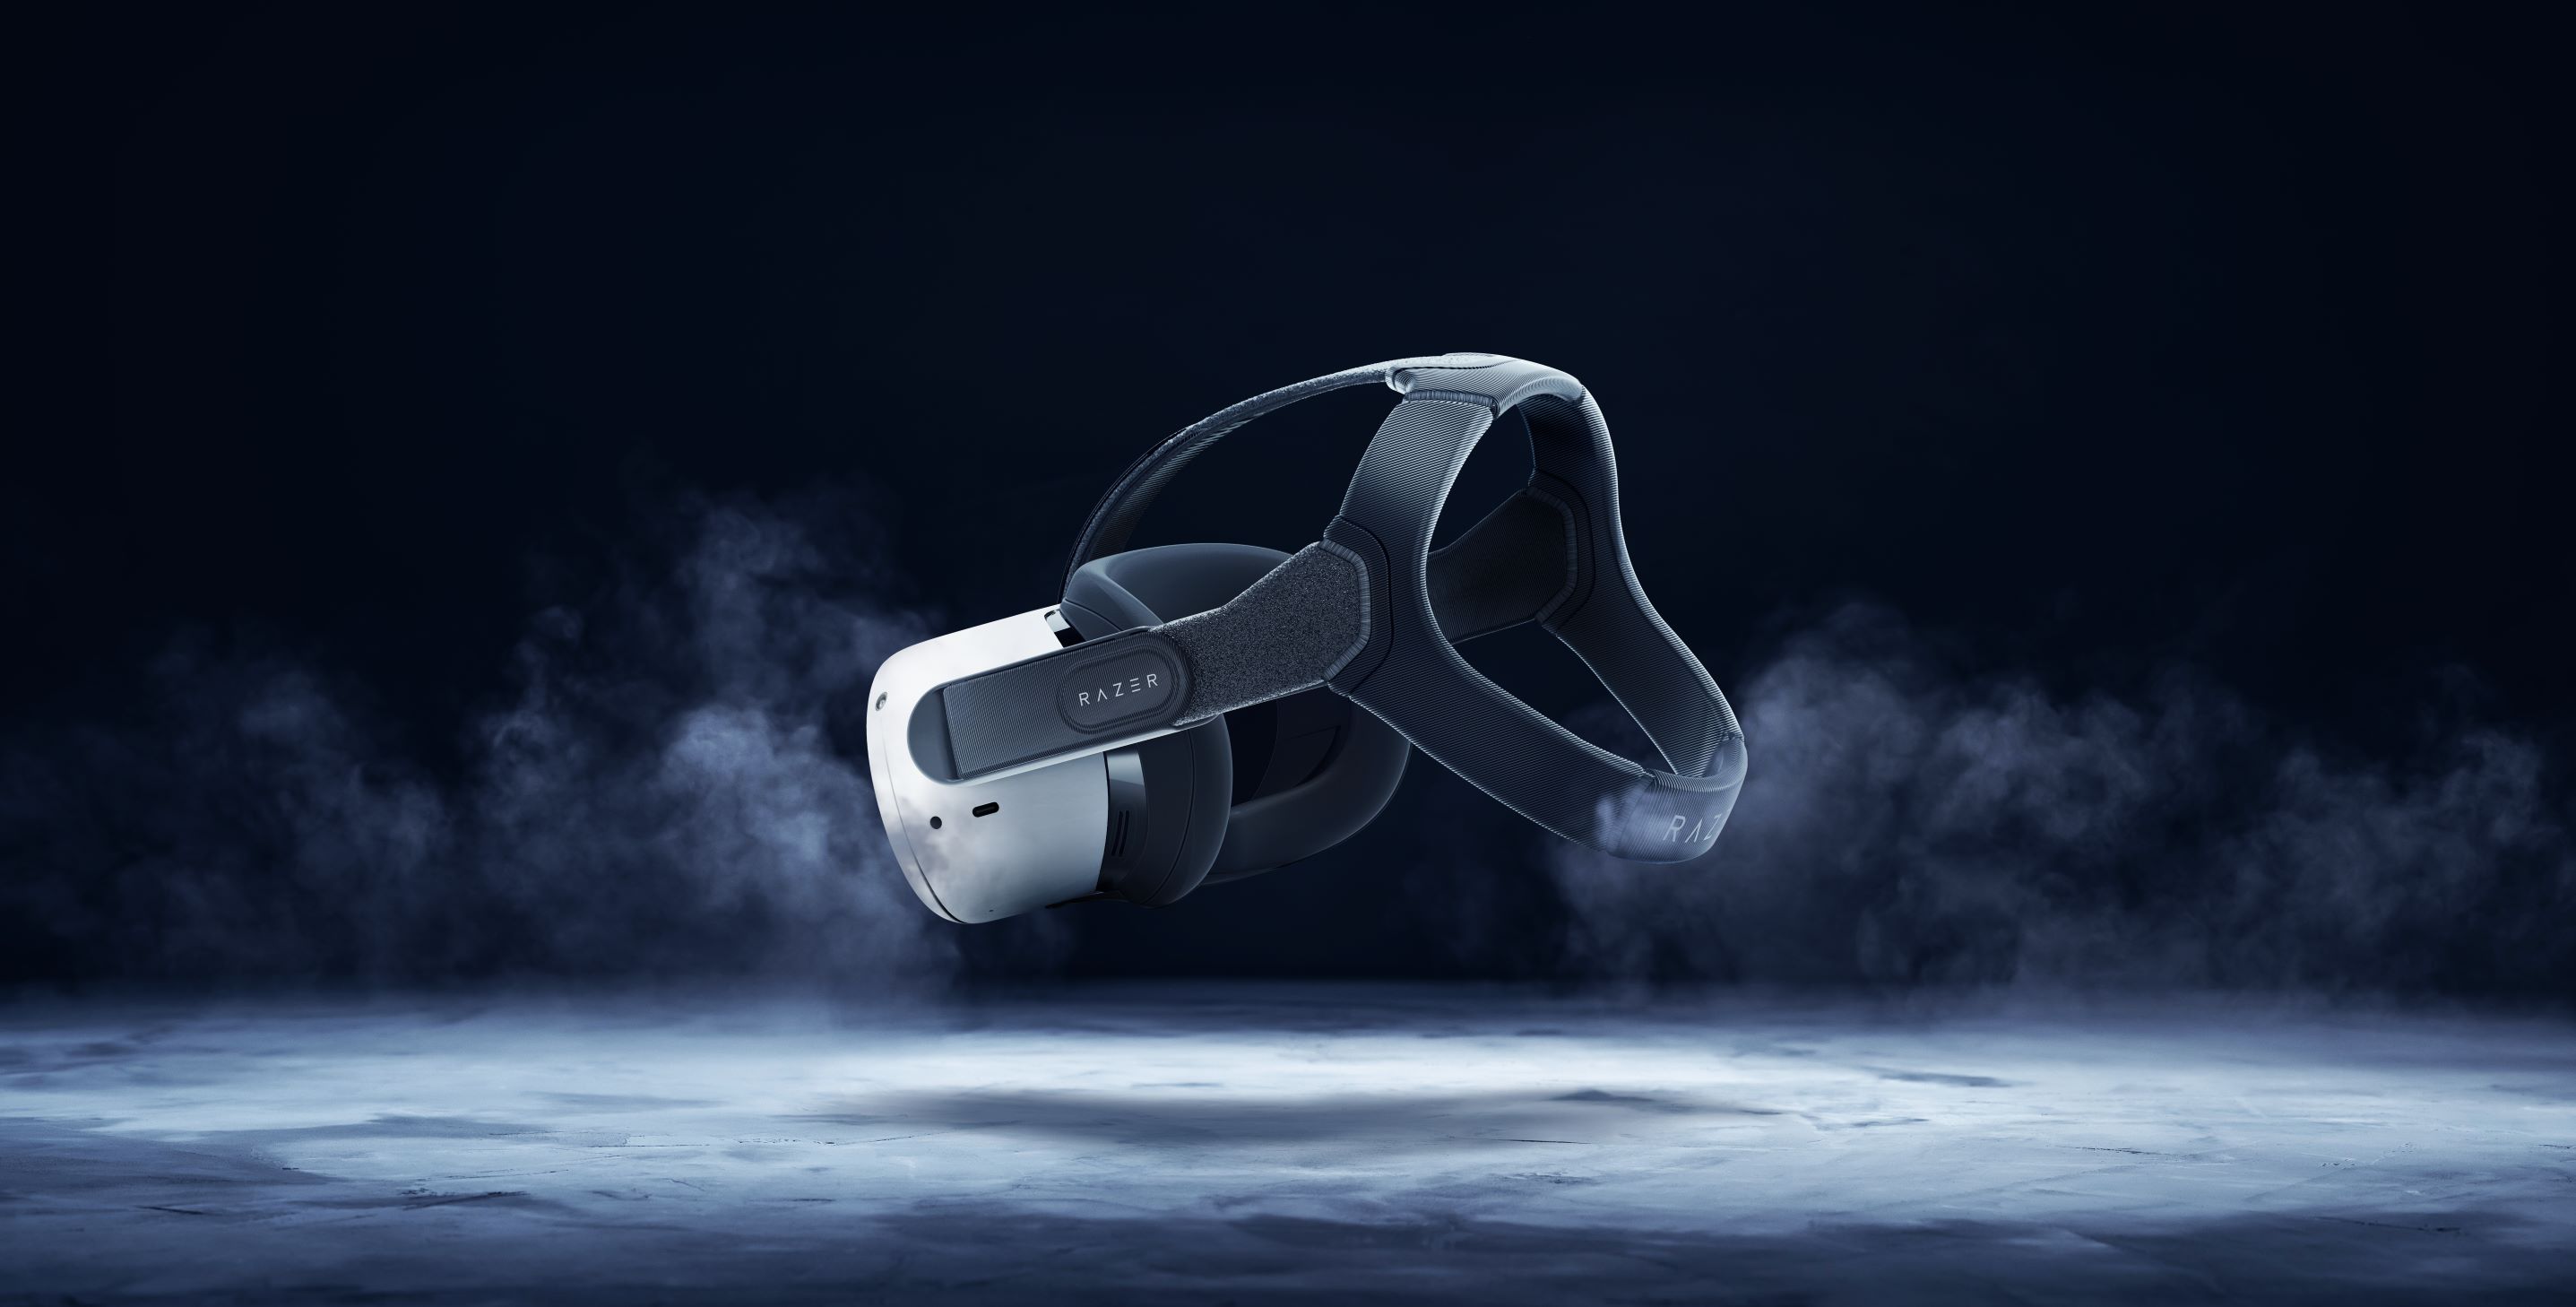 Razer breaks into VR with Meta Quest 2